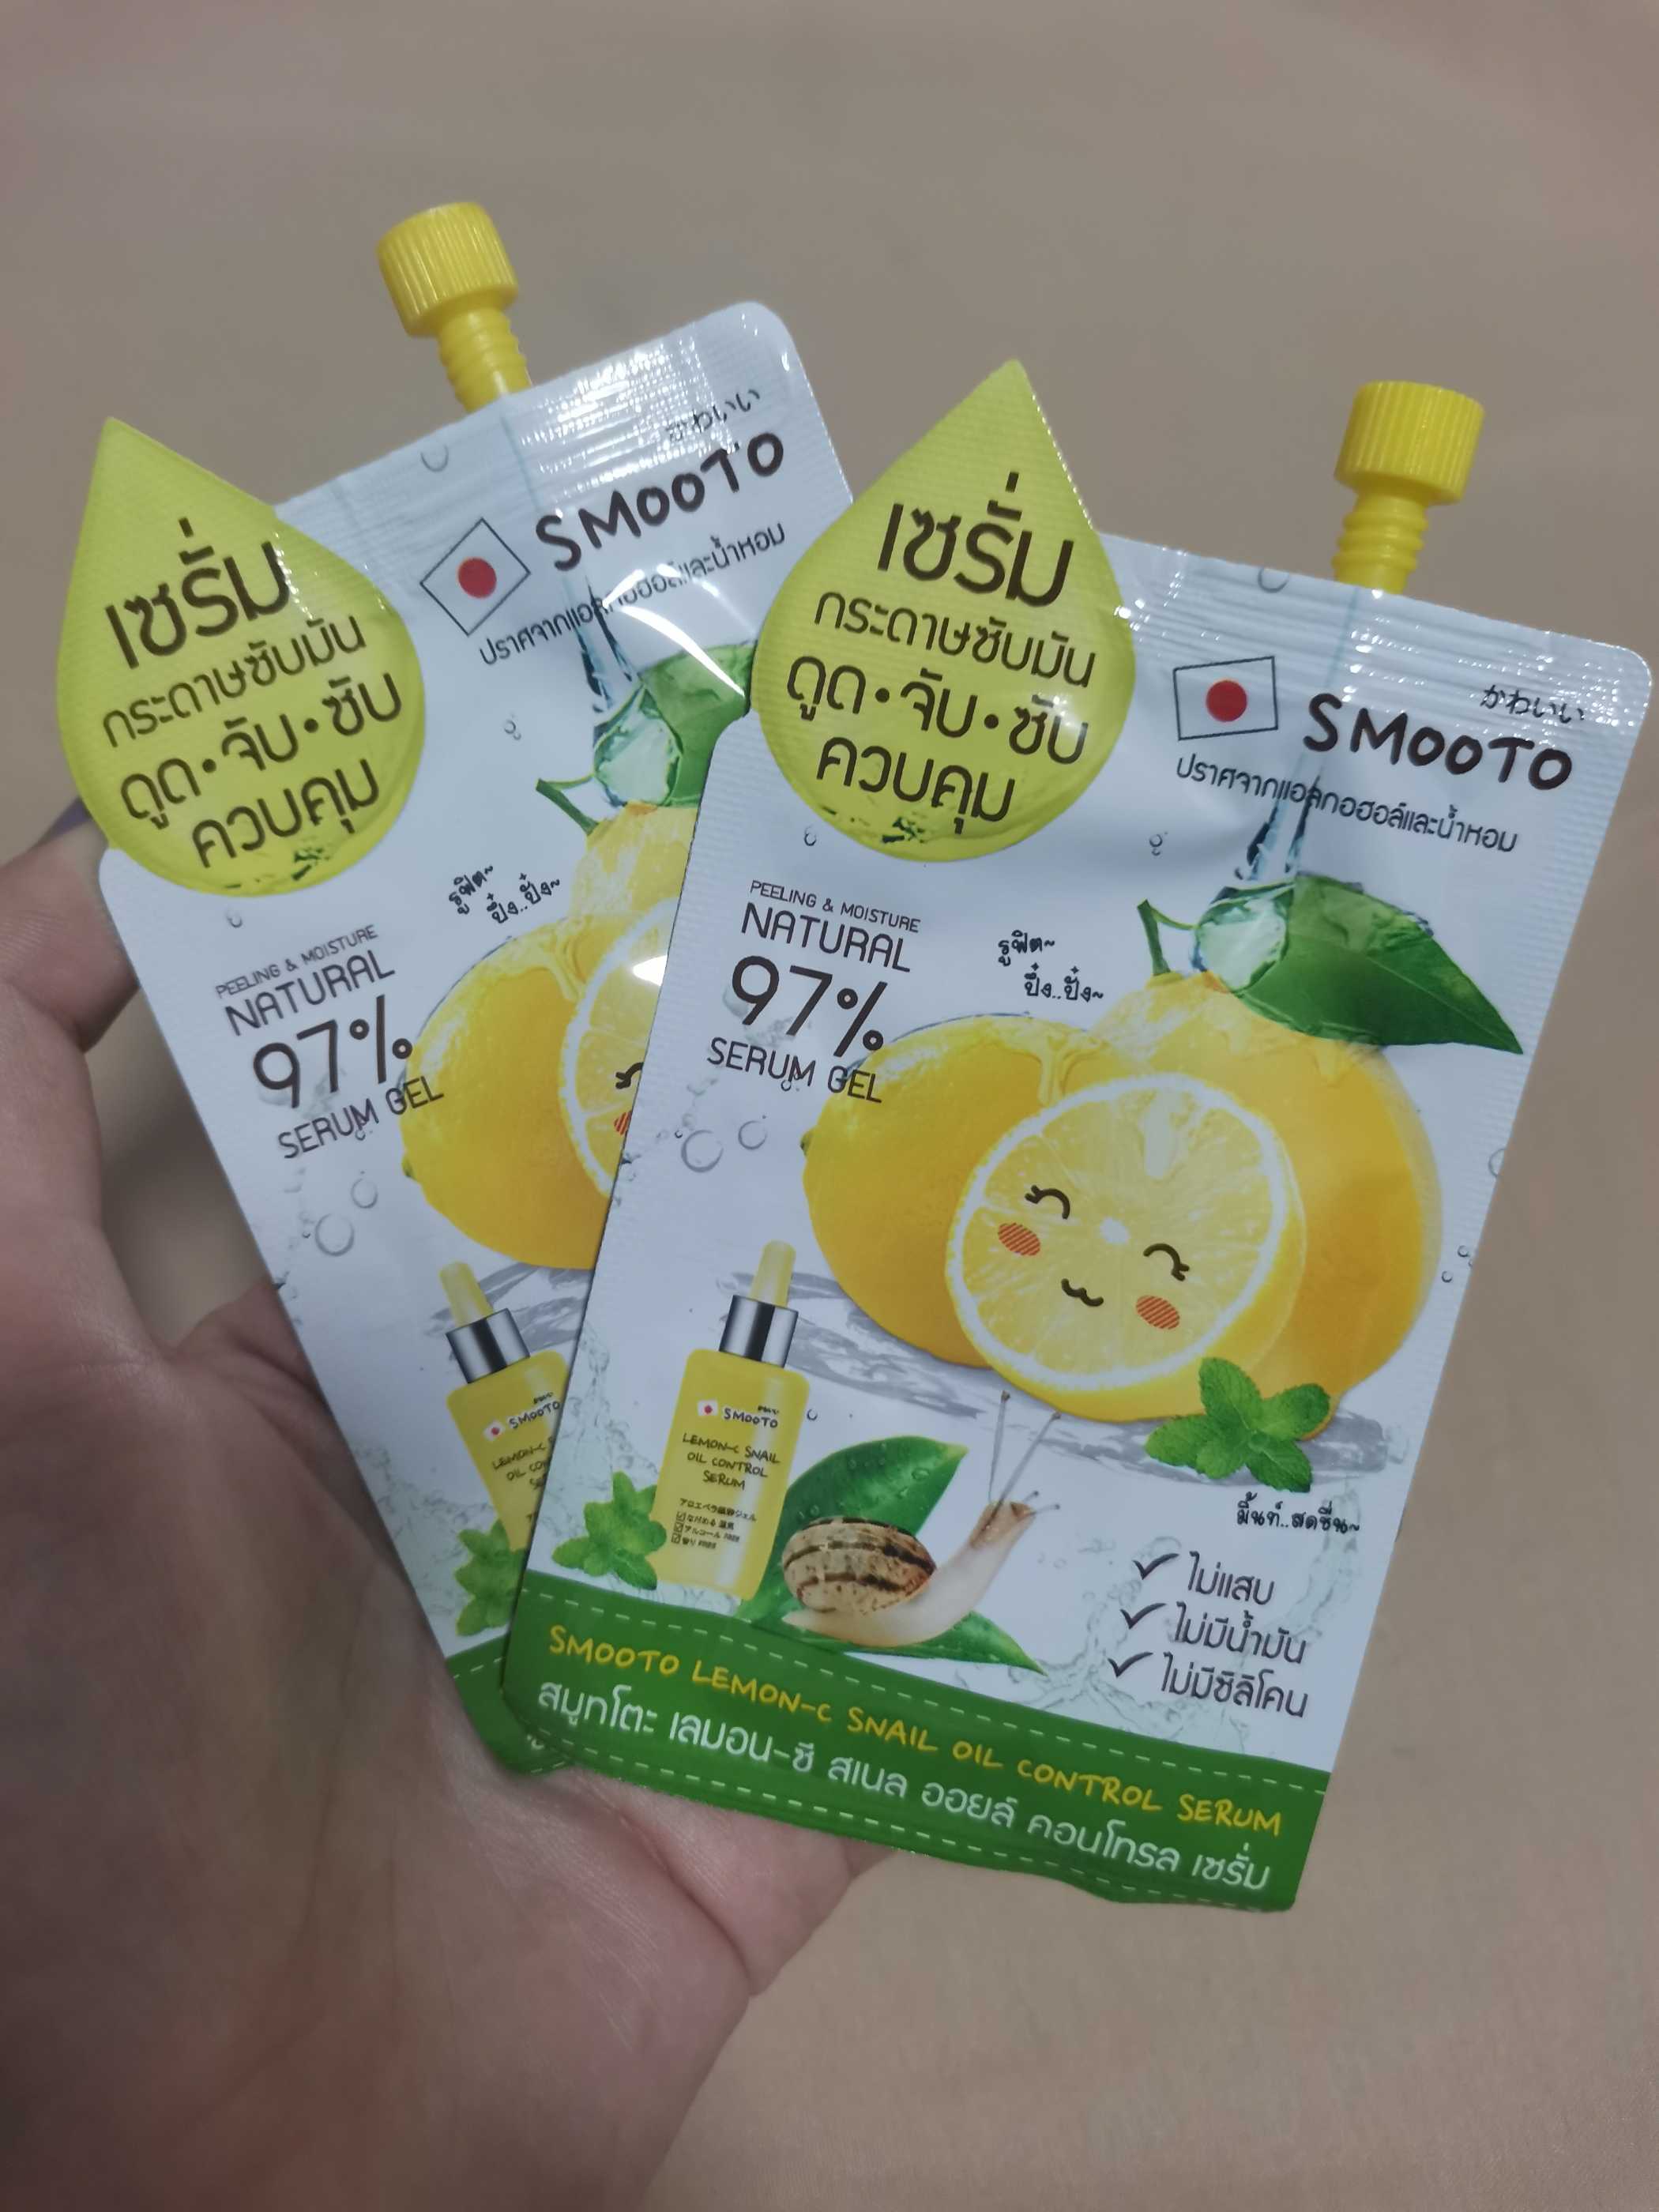 SMOOTO Lemon-C Snail Oil Control Serum